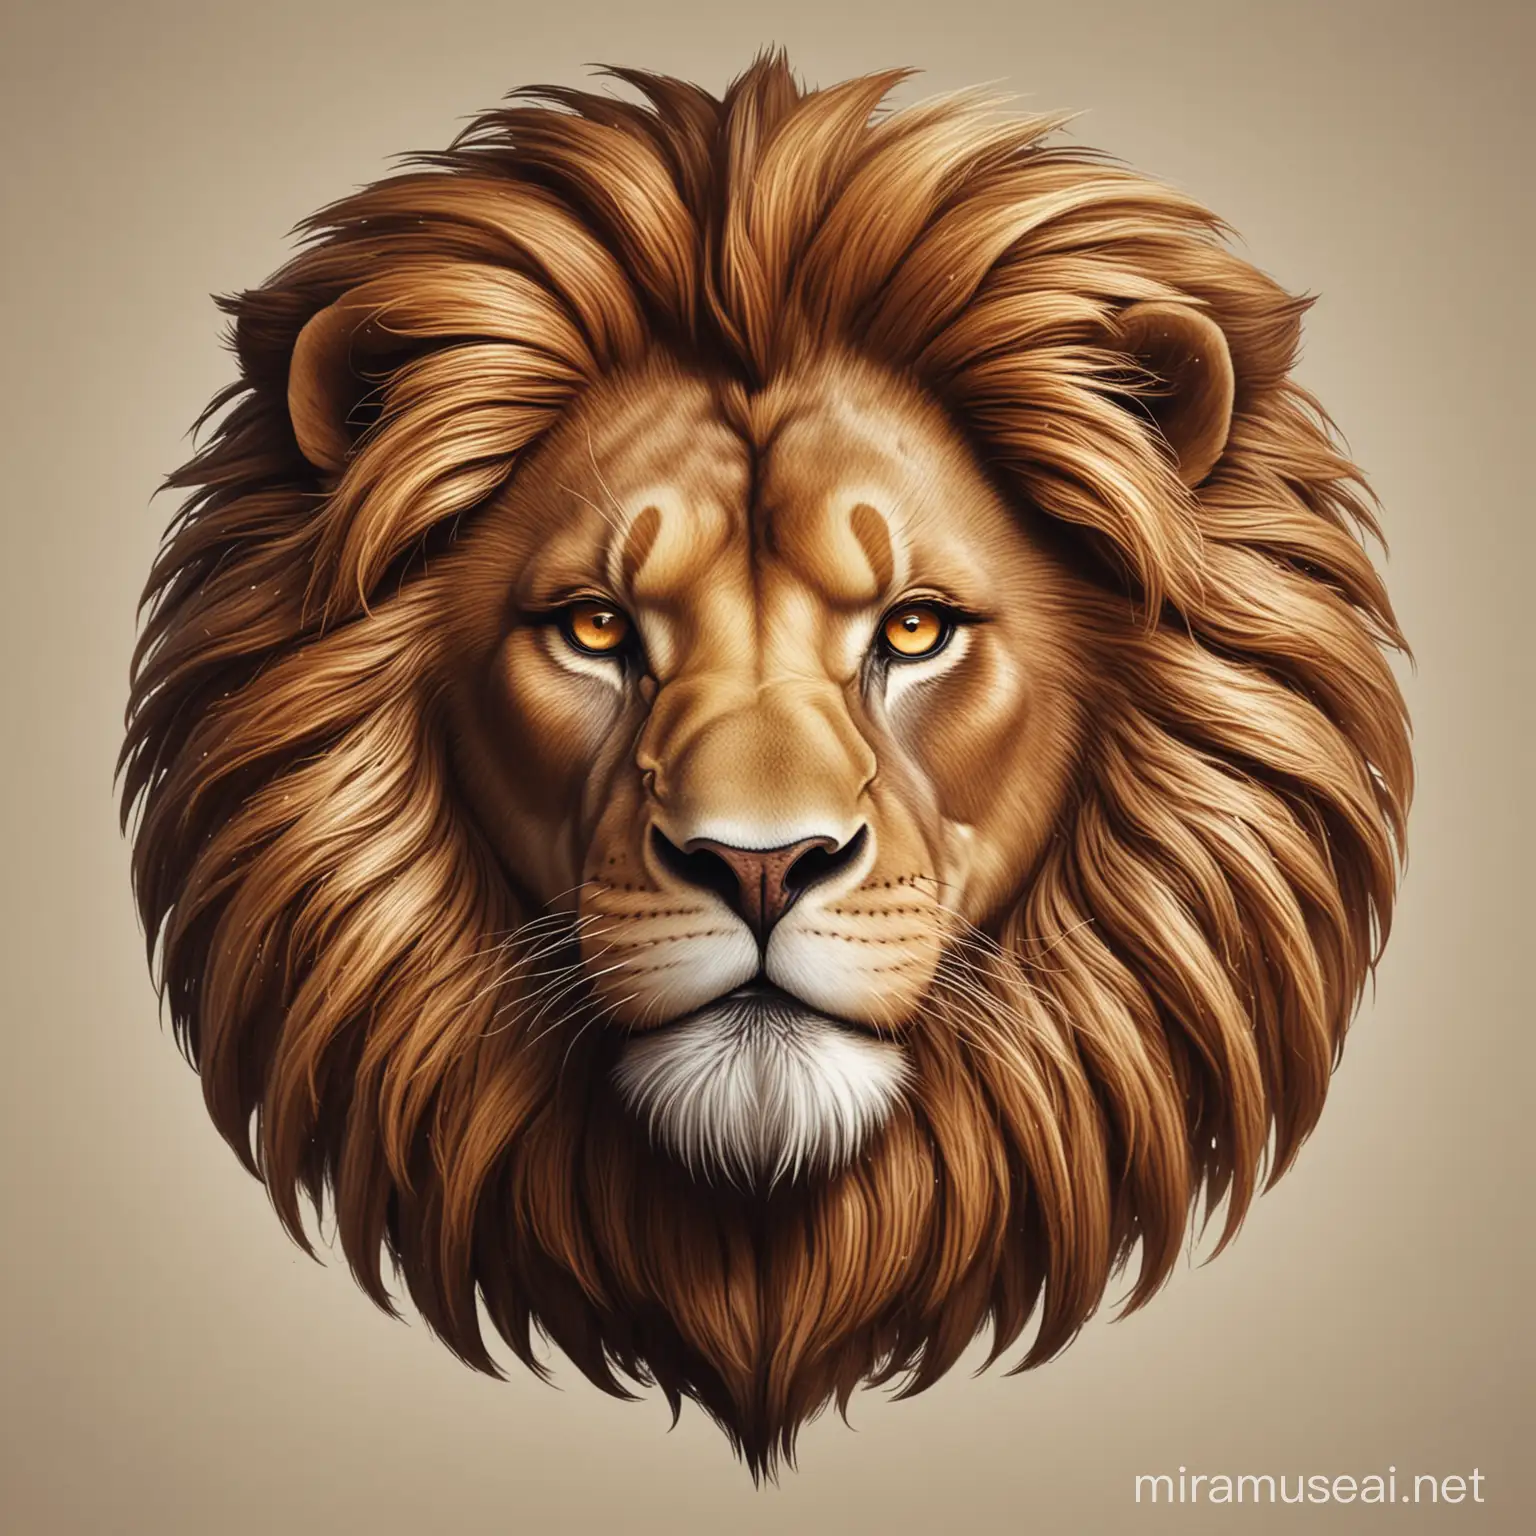 Regal Lion Logo Majestic King of the Jungle Illustration